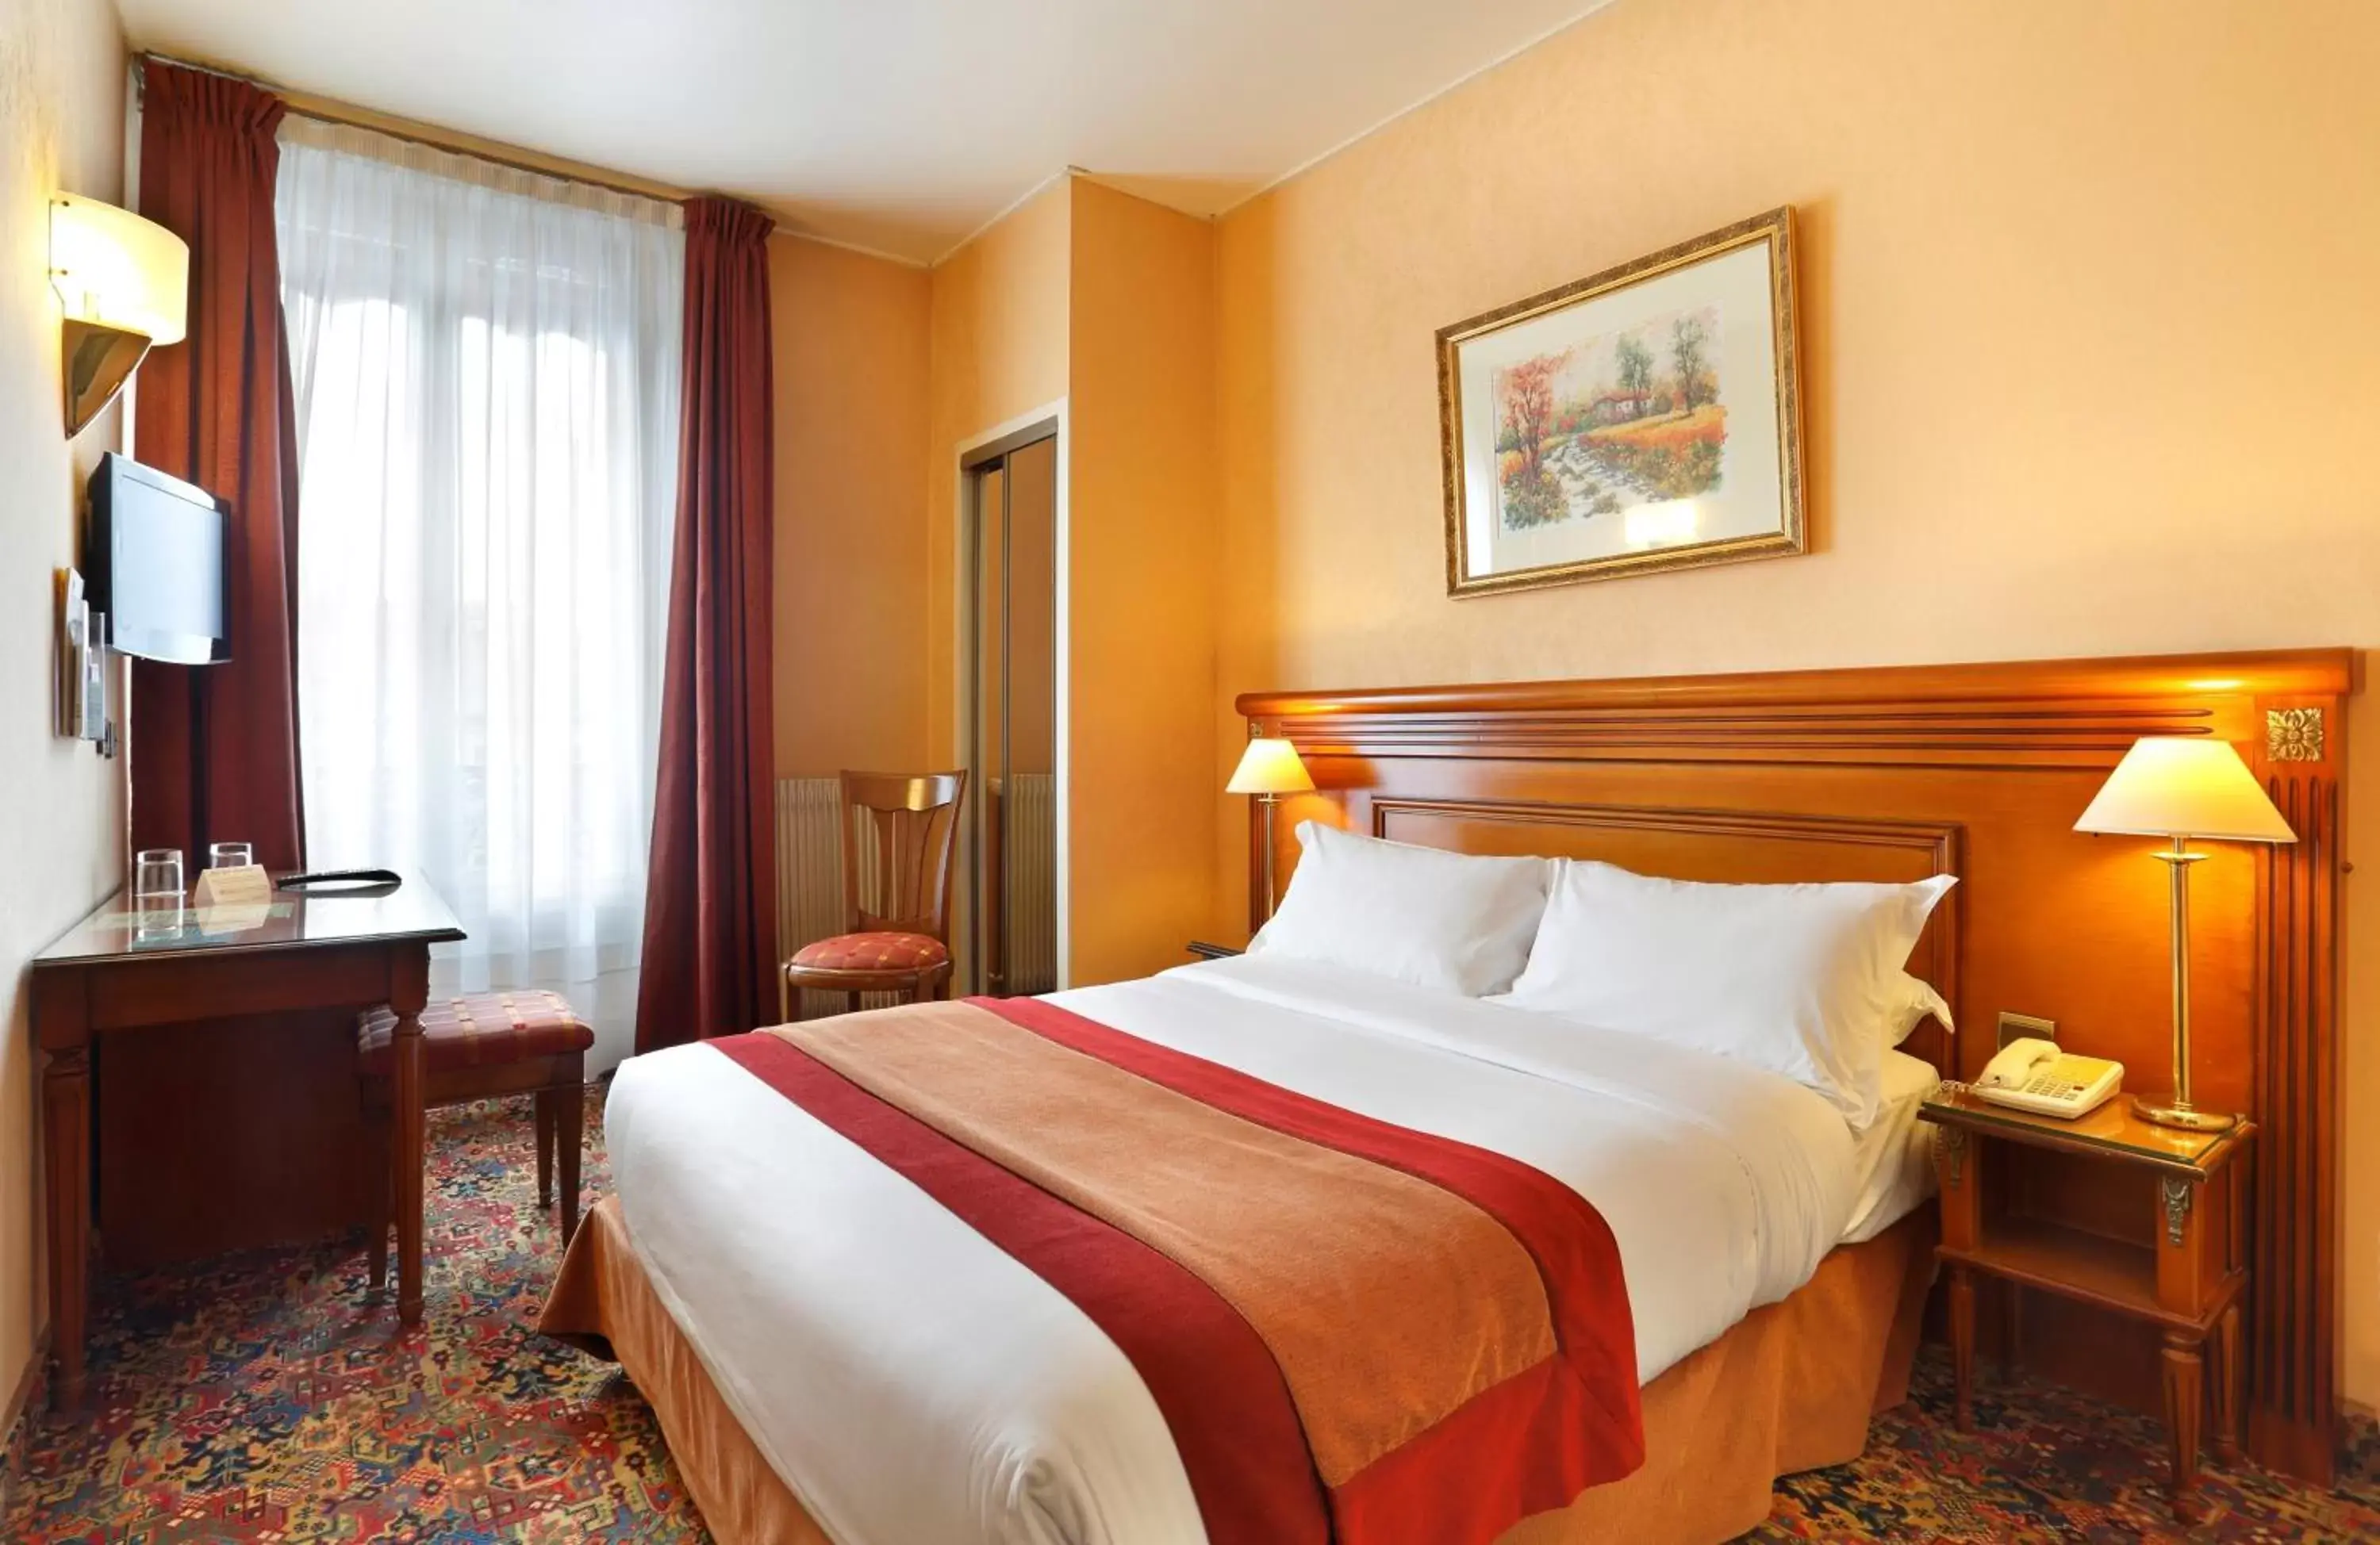 Comfort Double Room in Hotel Paix Republique